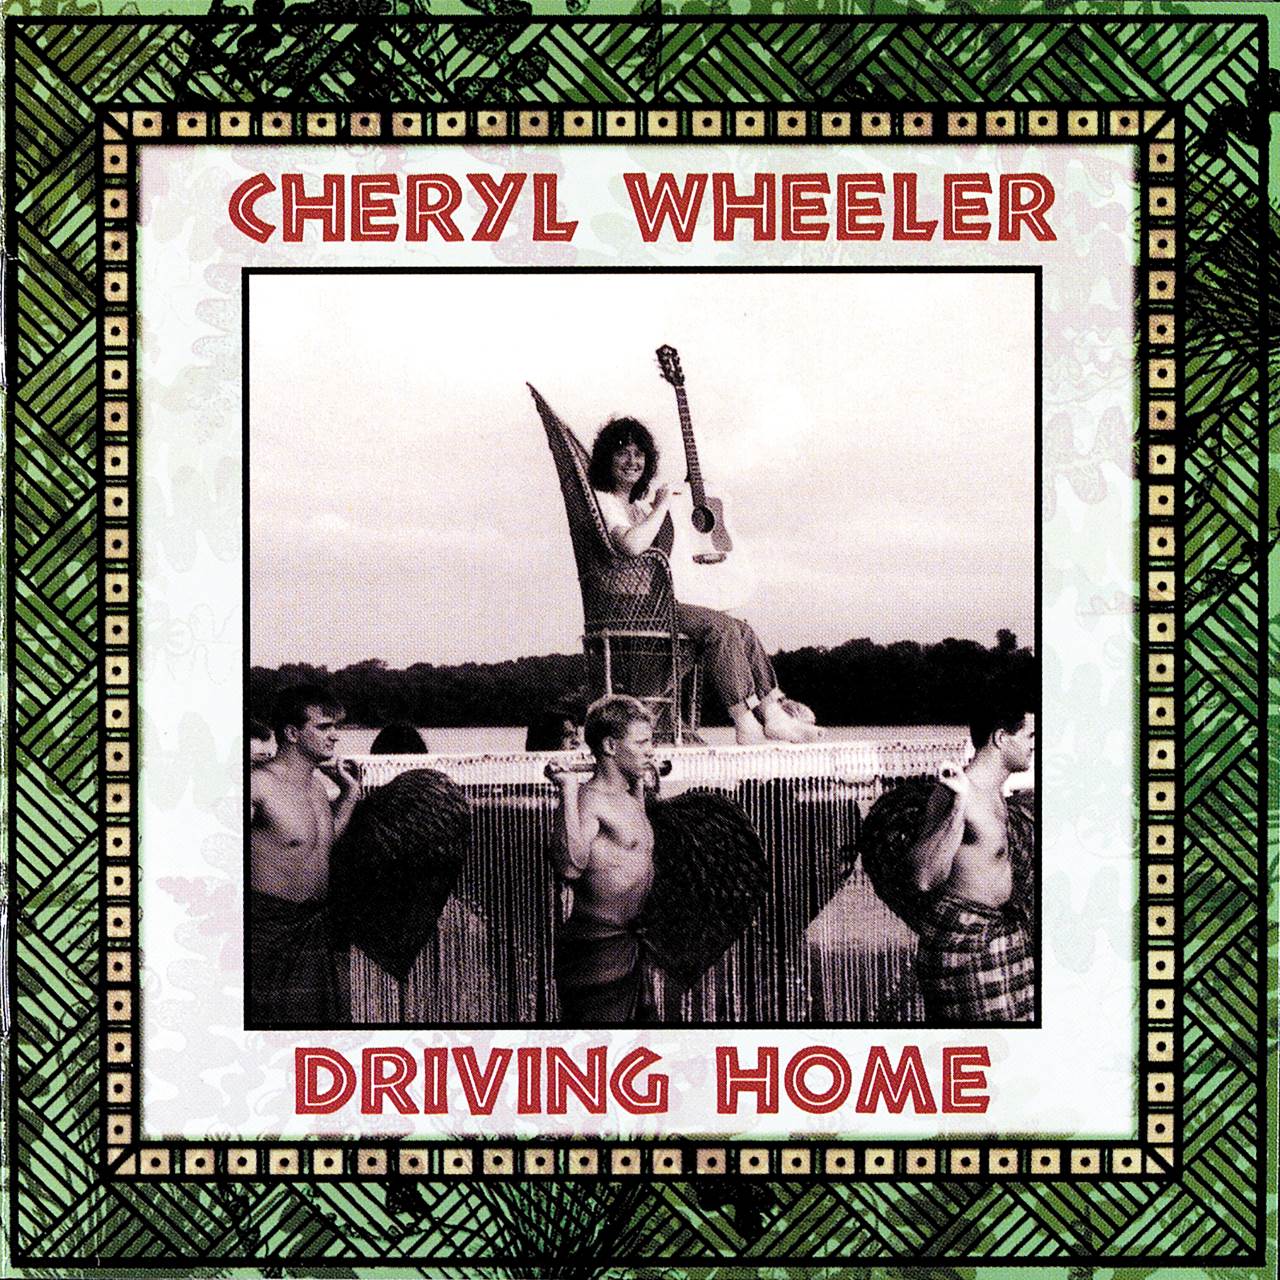 Cheryl Wheeler – Driving Home cover album